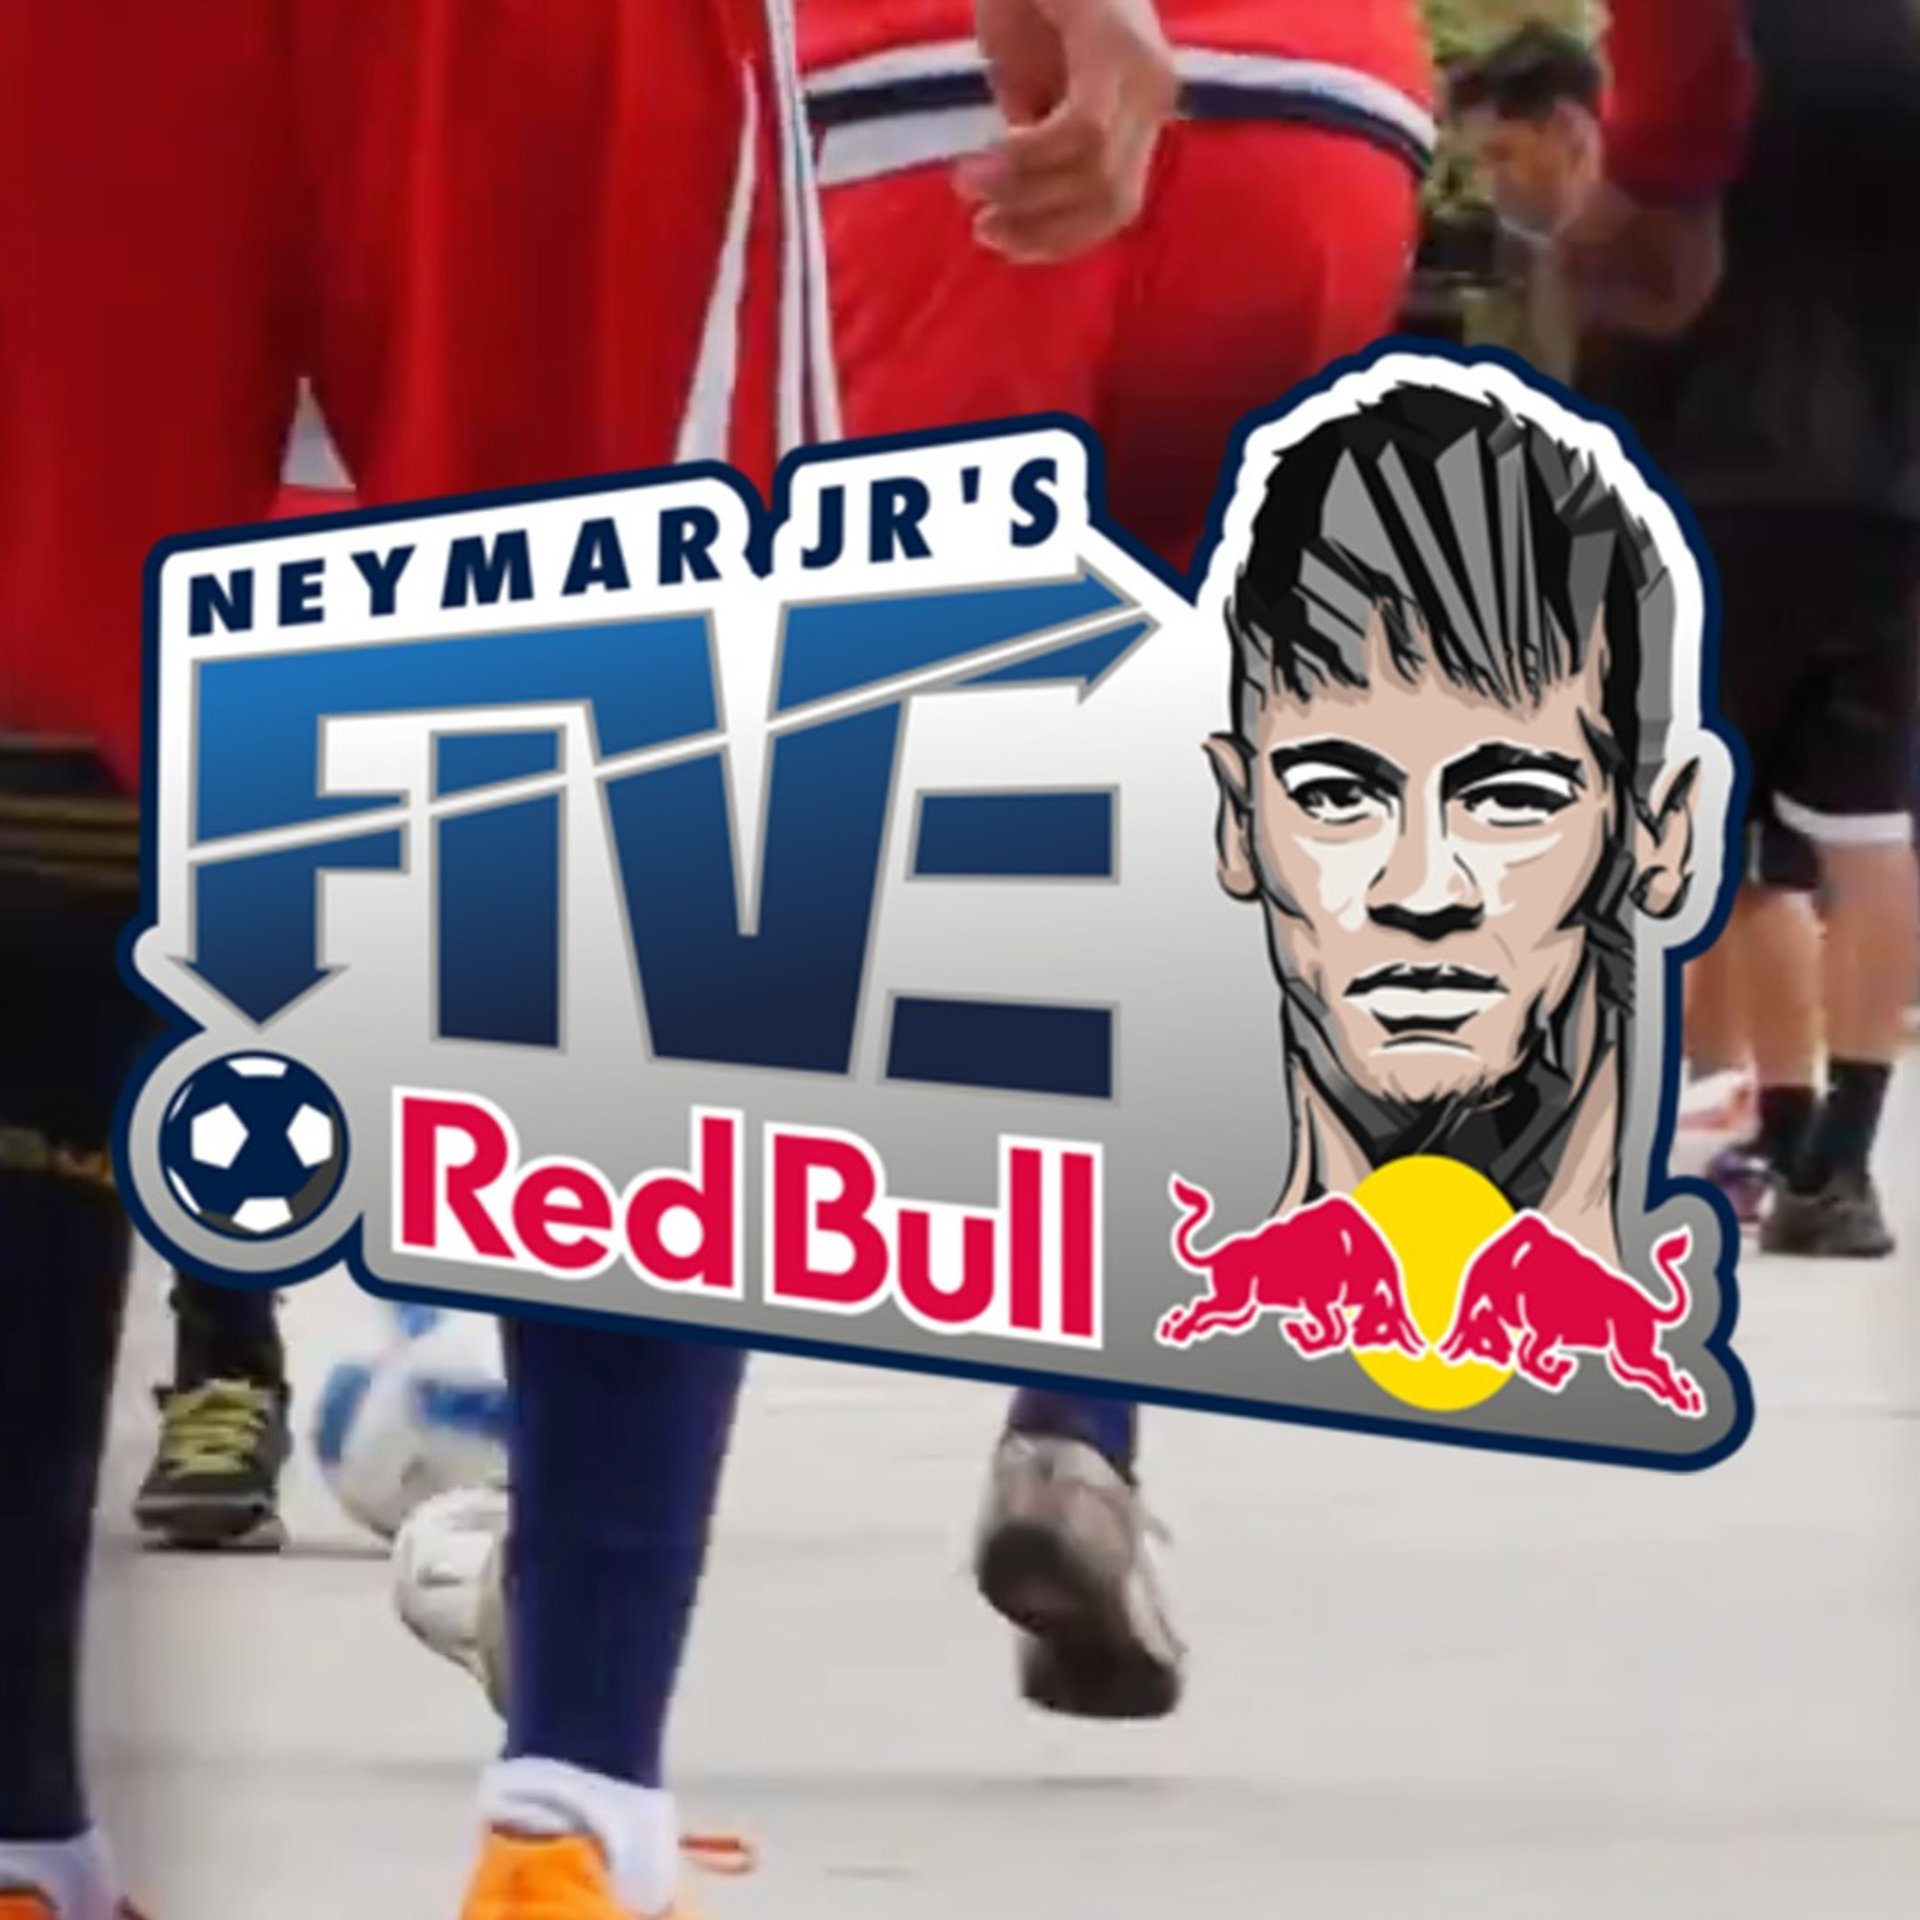 Neymar Jr's Five by Red Bull New York, NY The Vendry